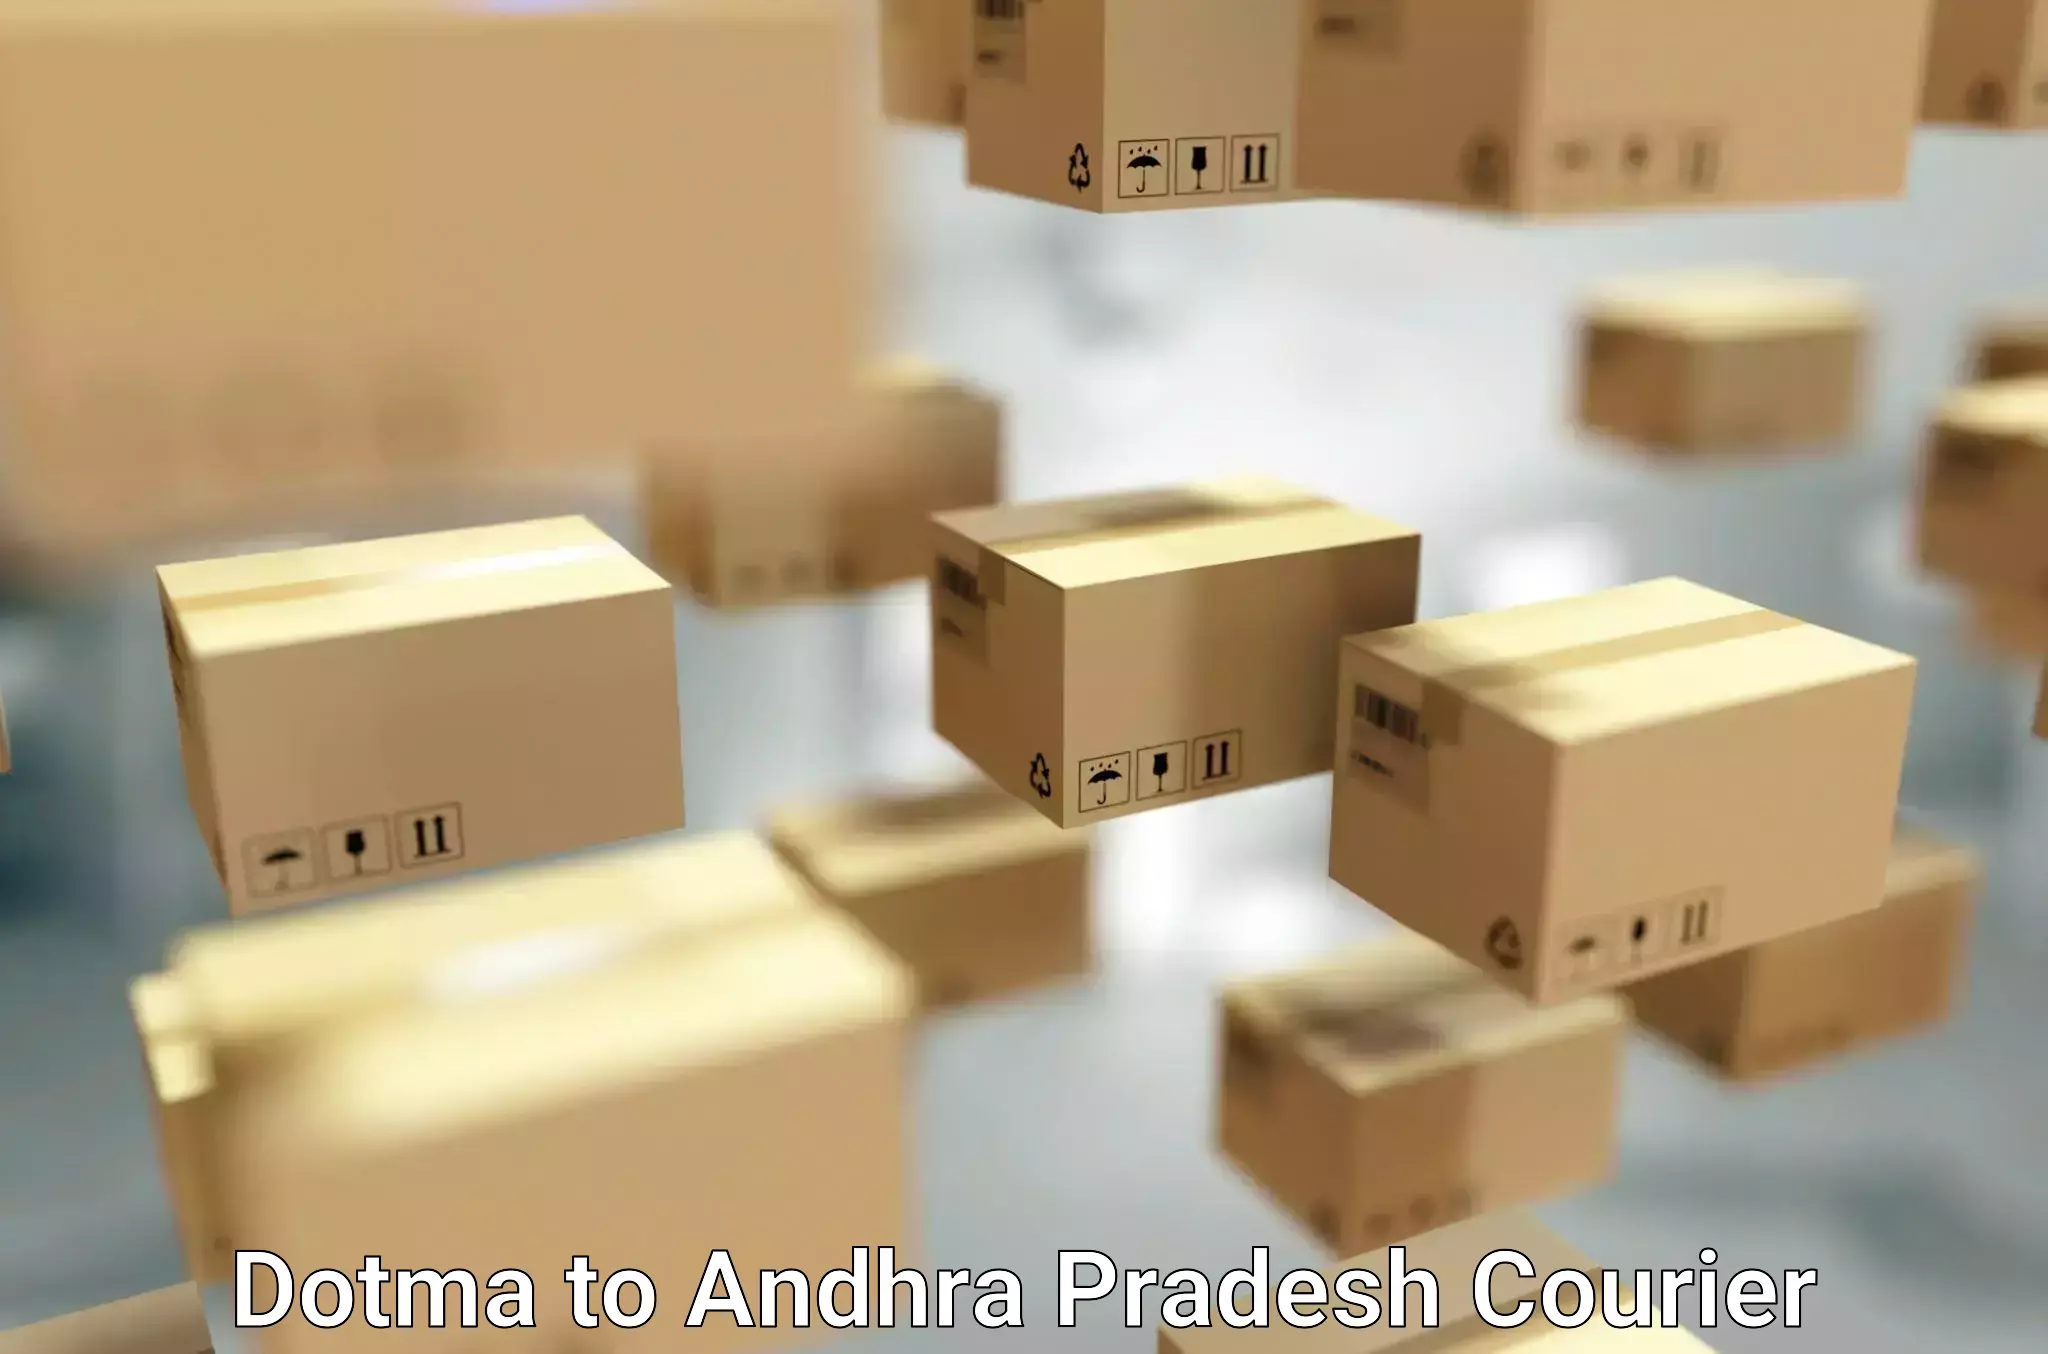 Trusted moving company Dotma to Andhra Pradesh